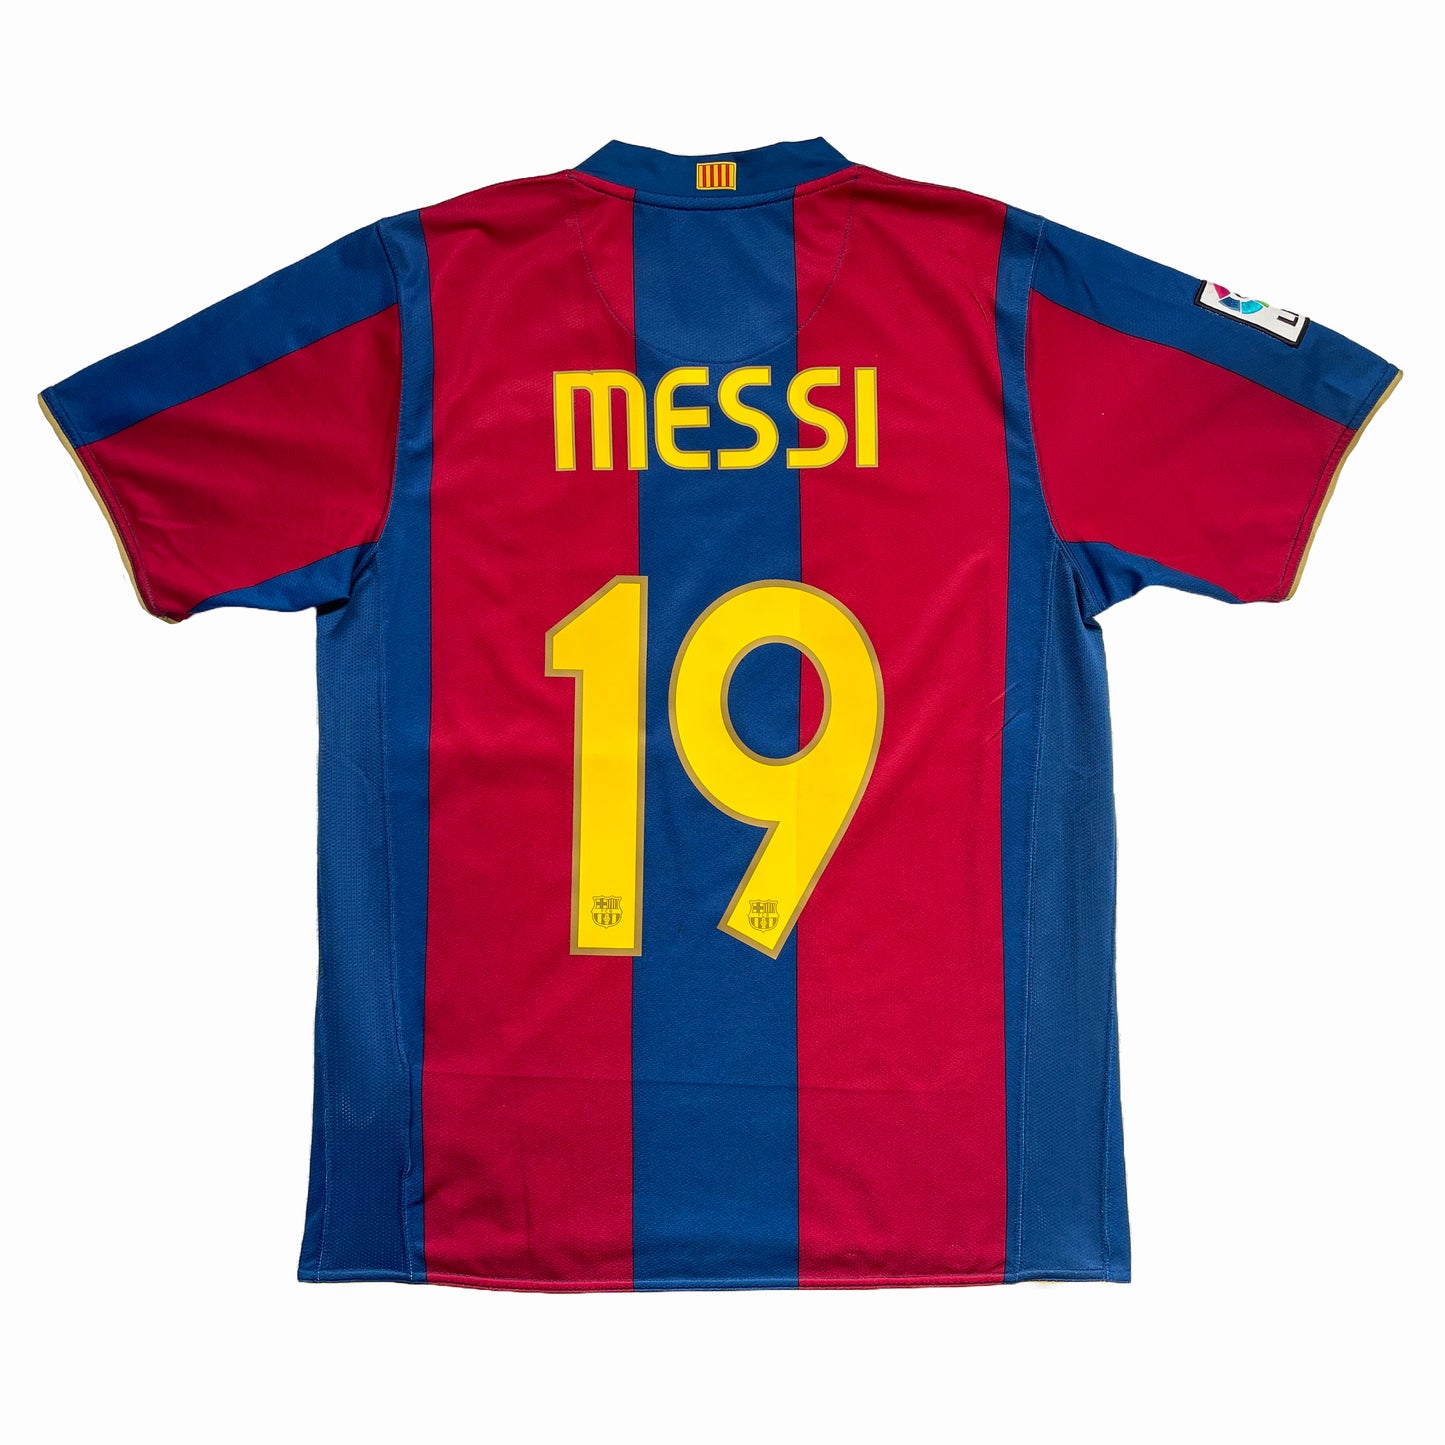 2007-2008 FC Barcelona home shirt #19 Messi (M)